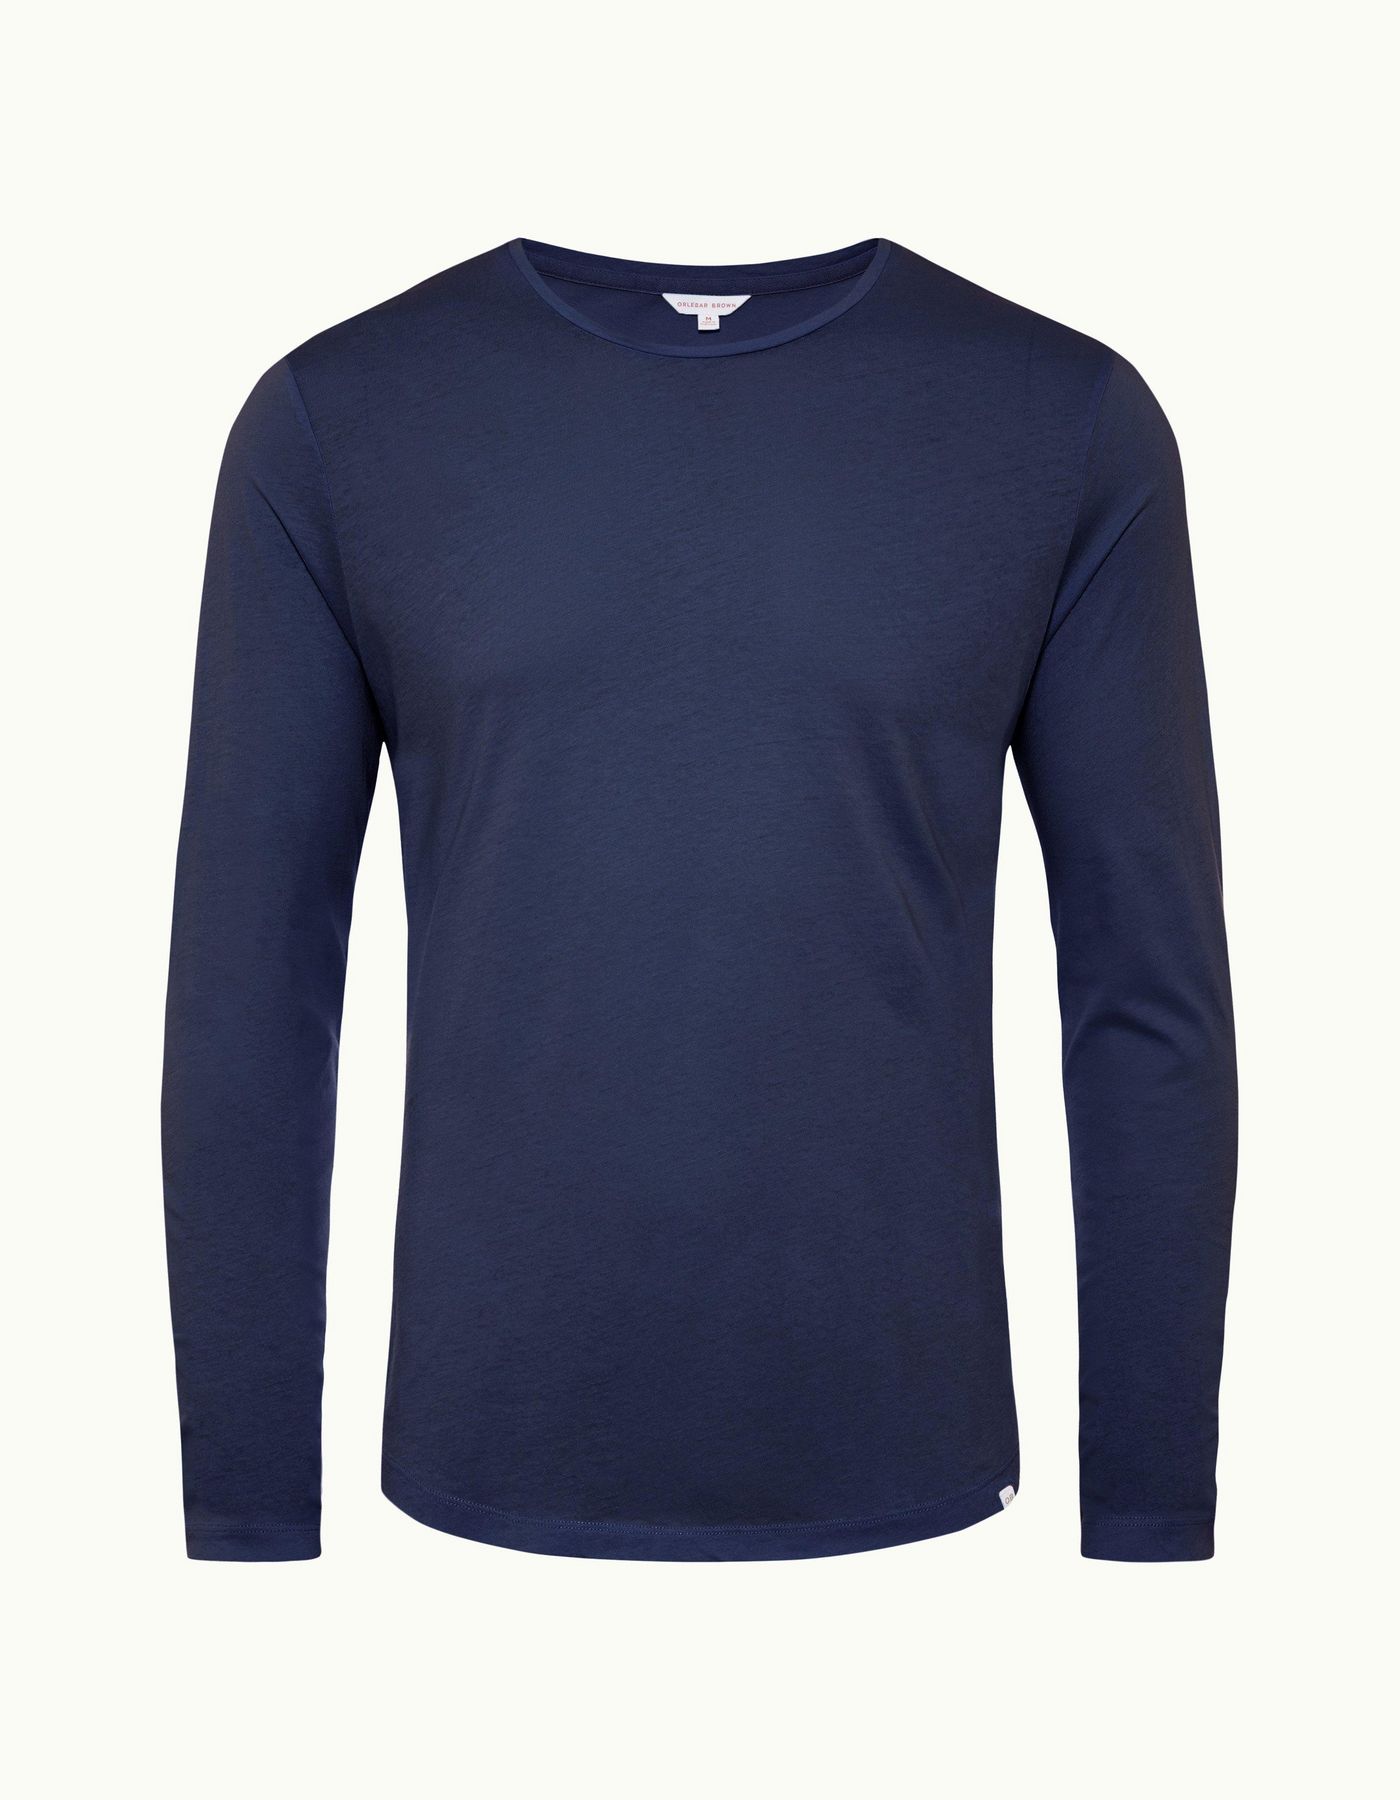 Ob-T Merino - Mens Navy Tailored Fit Long-Sleeve Merino T-Shirt